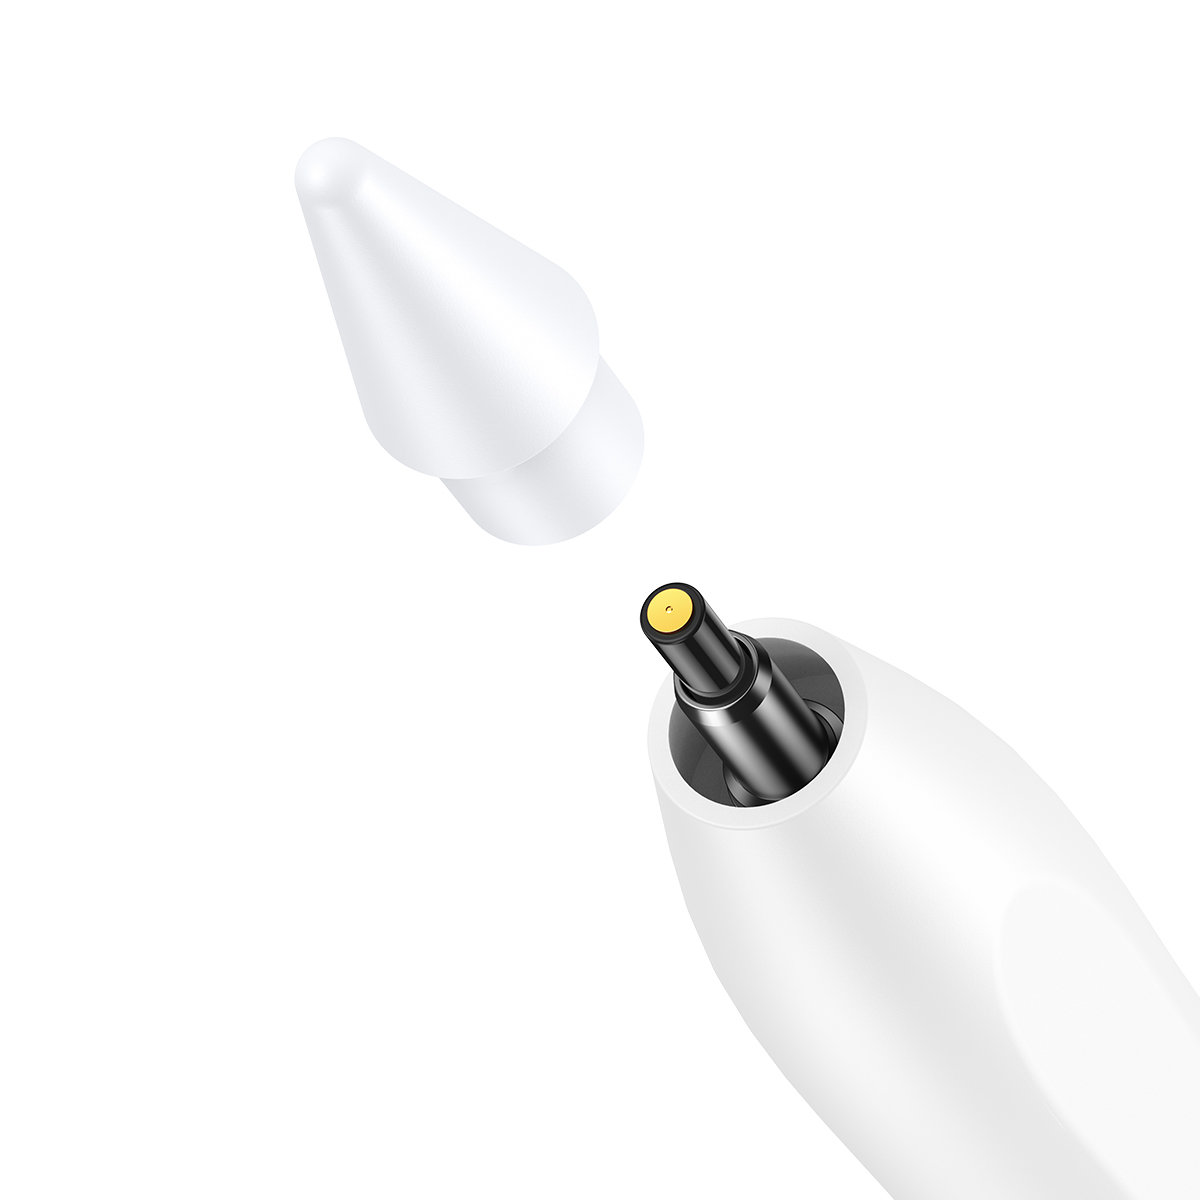 Baseus penna capacitiva Smooth Writing Active con indicatore LED + cavo Type-C 0.3mt white SXBC000202